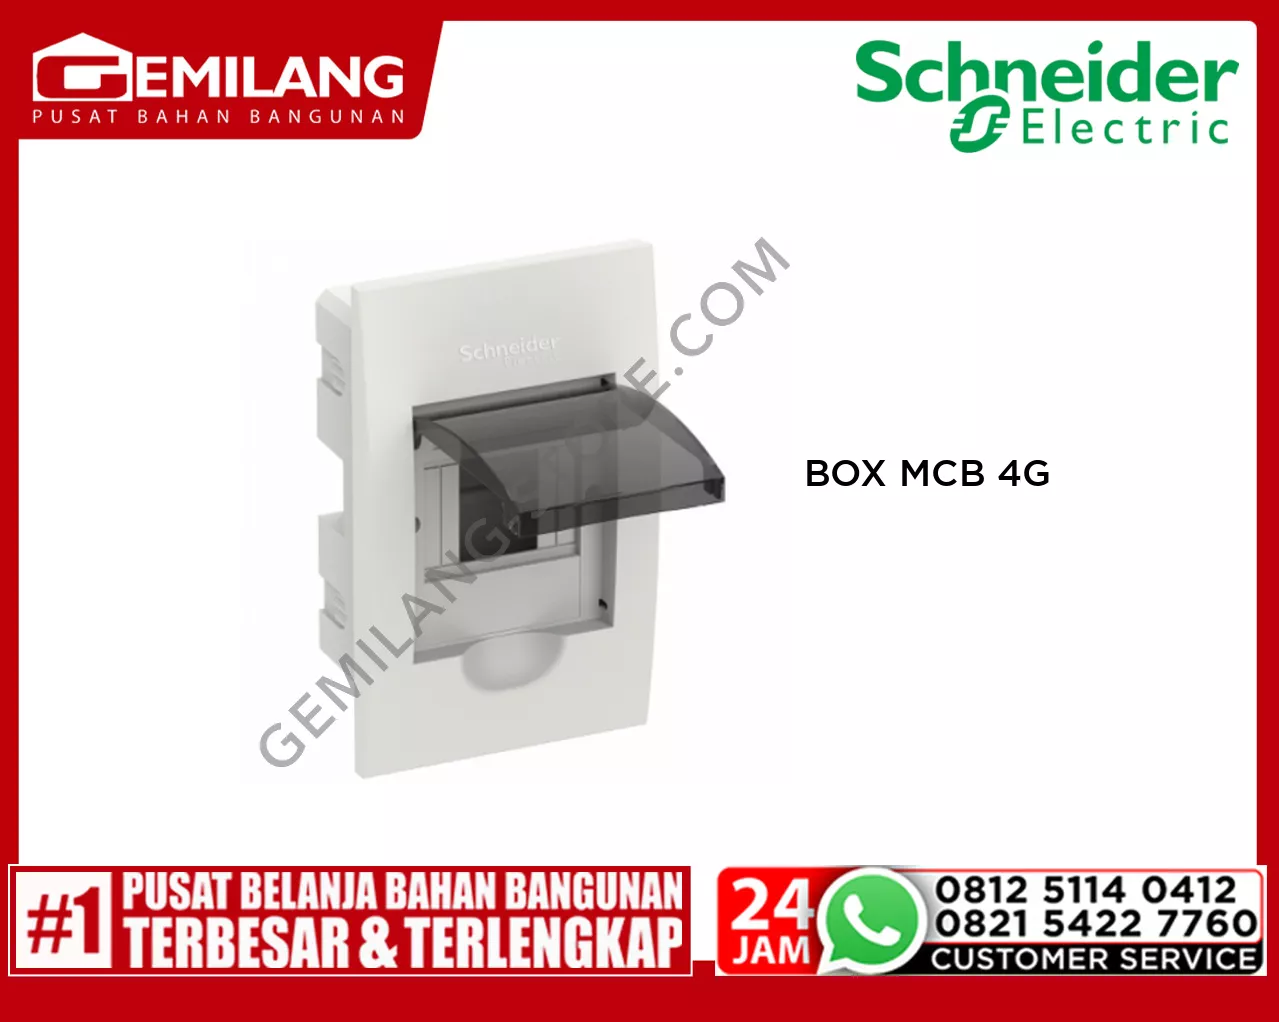 SCHNEIDER BOX MCB 4G